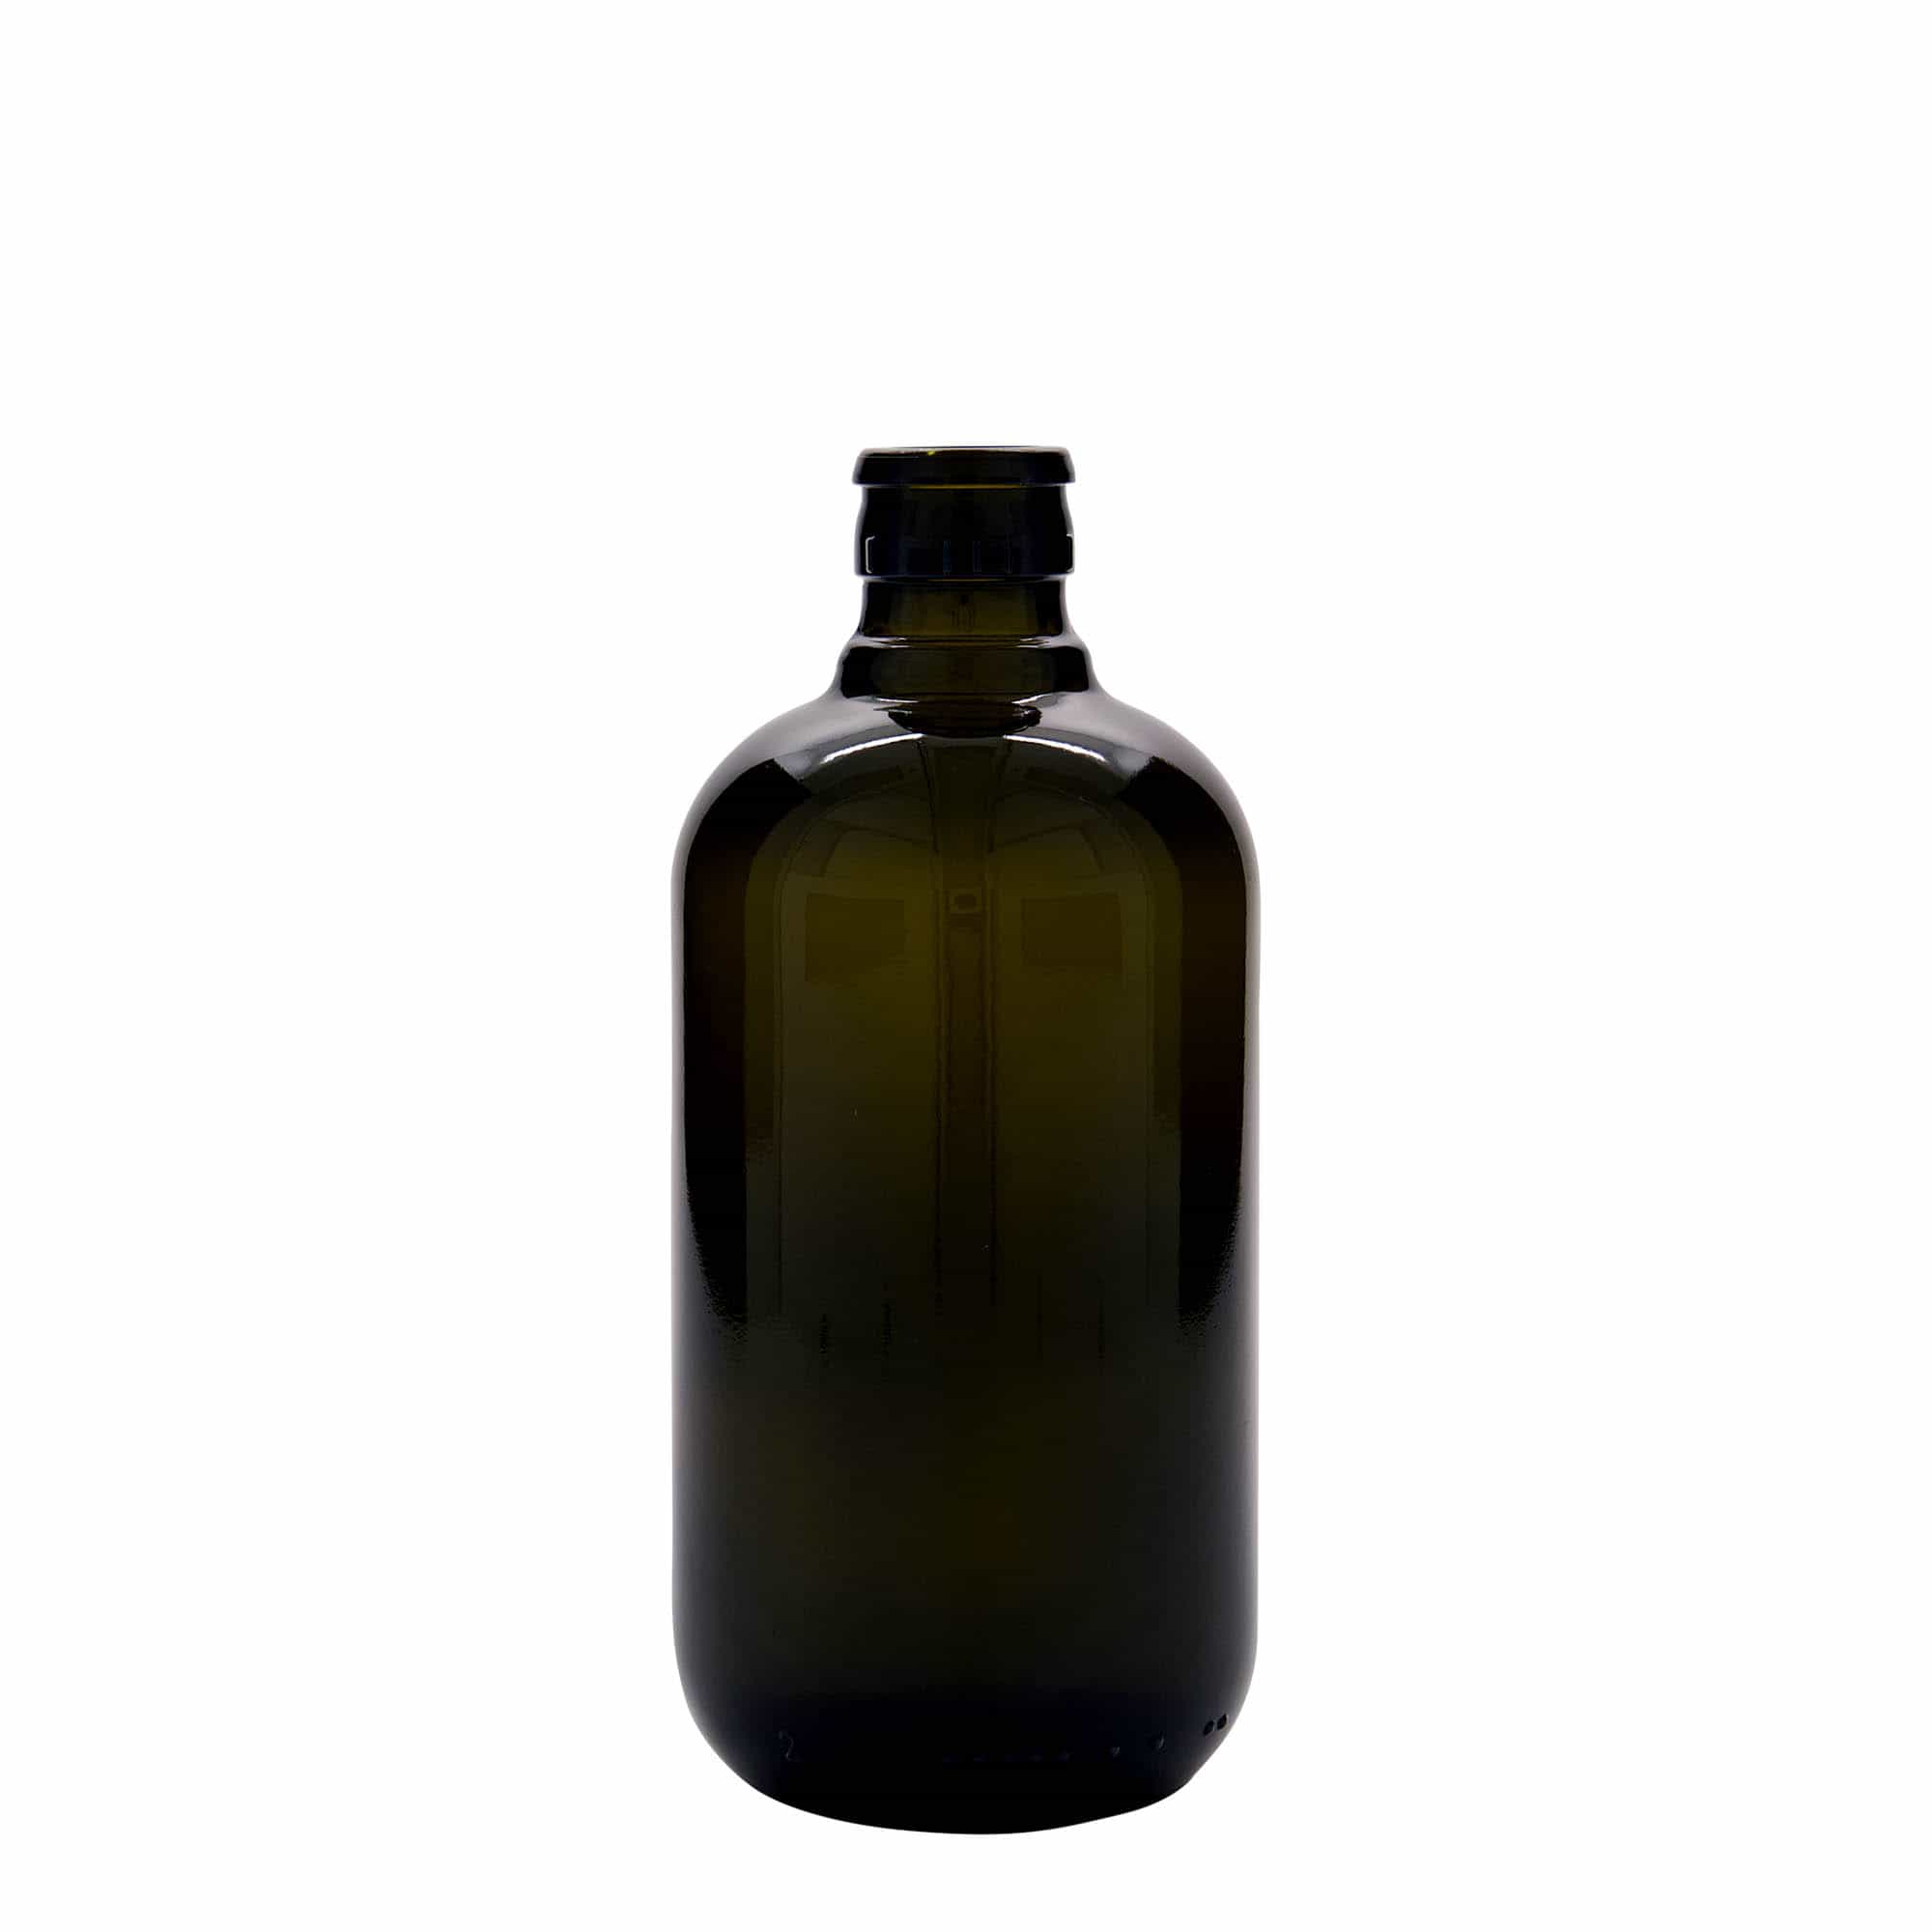 500 ml eddike-/olieflaske 'Biolio', glas, antikgrøn, åbning: DOP